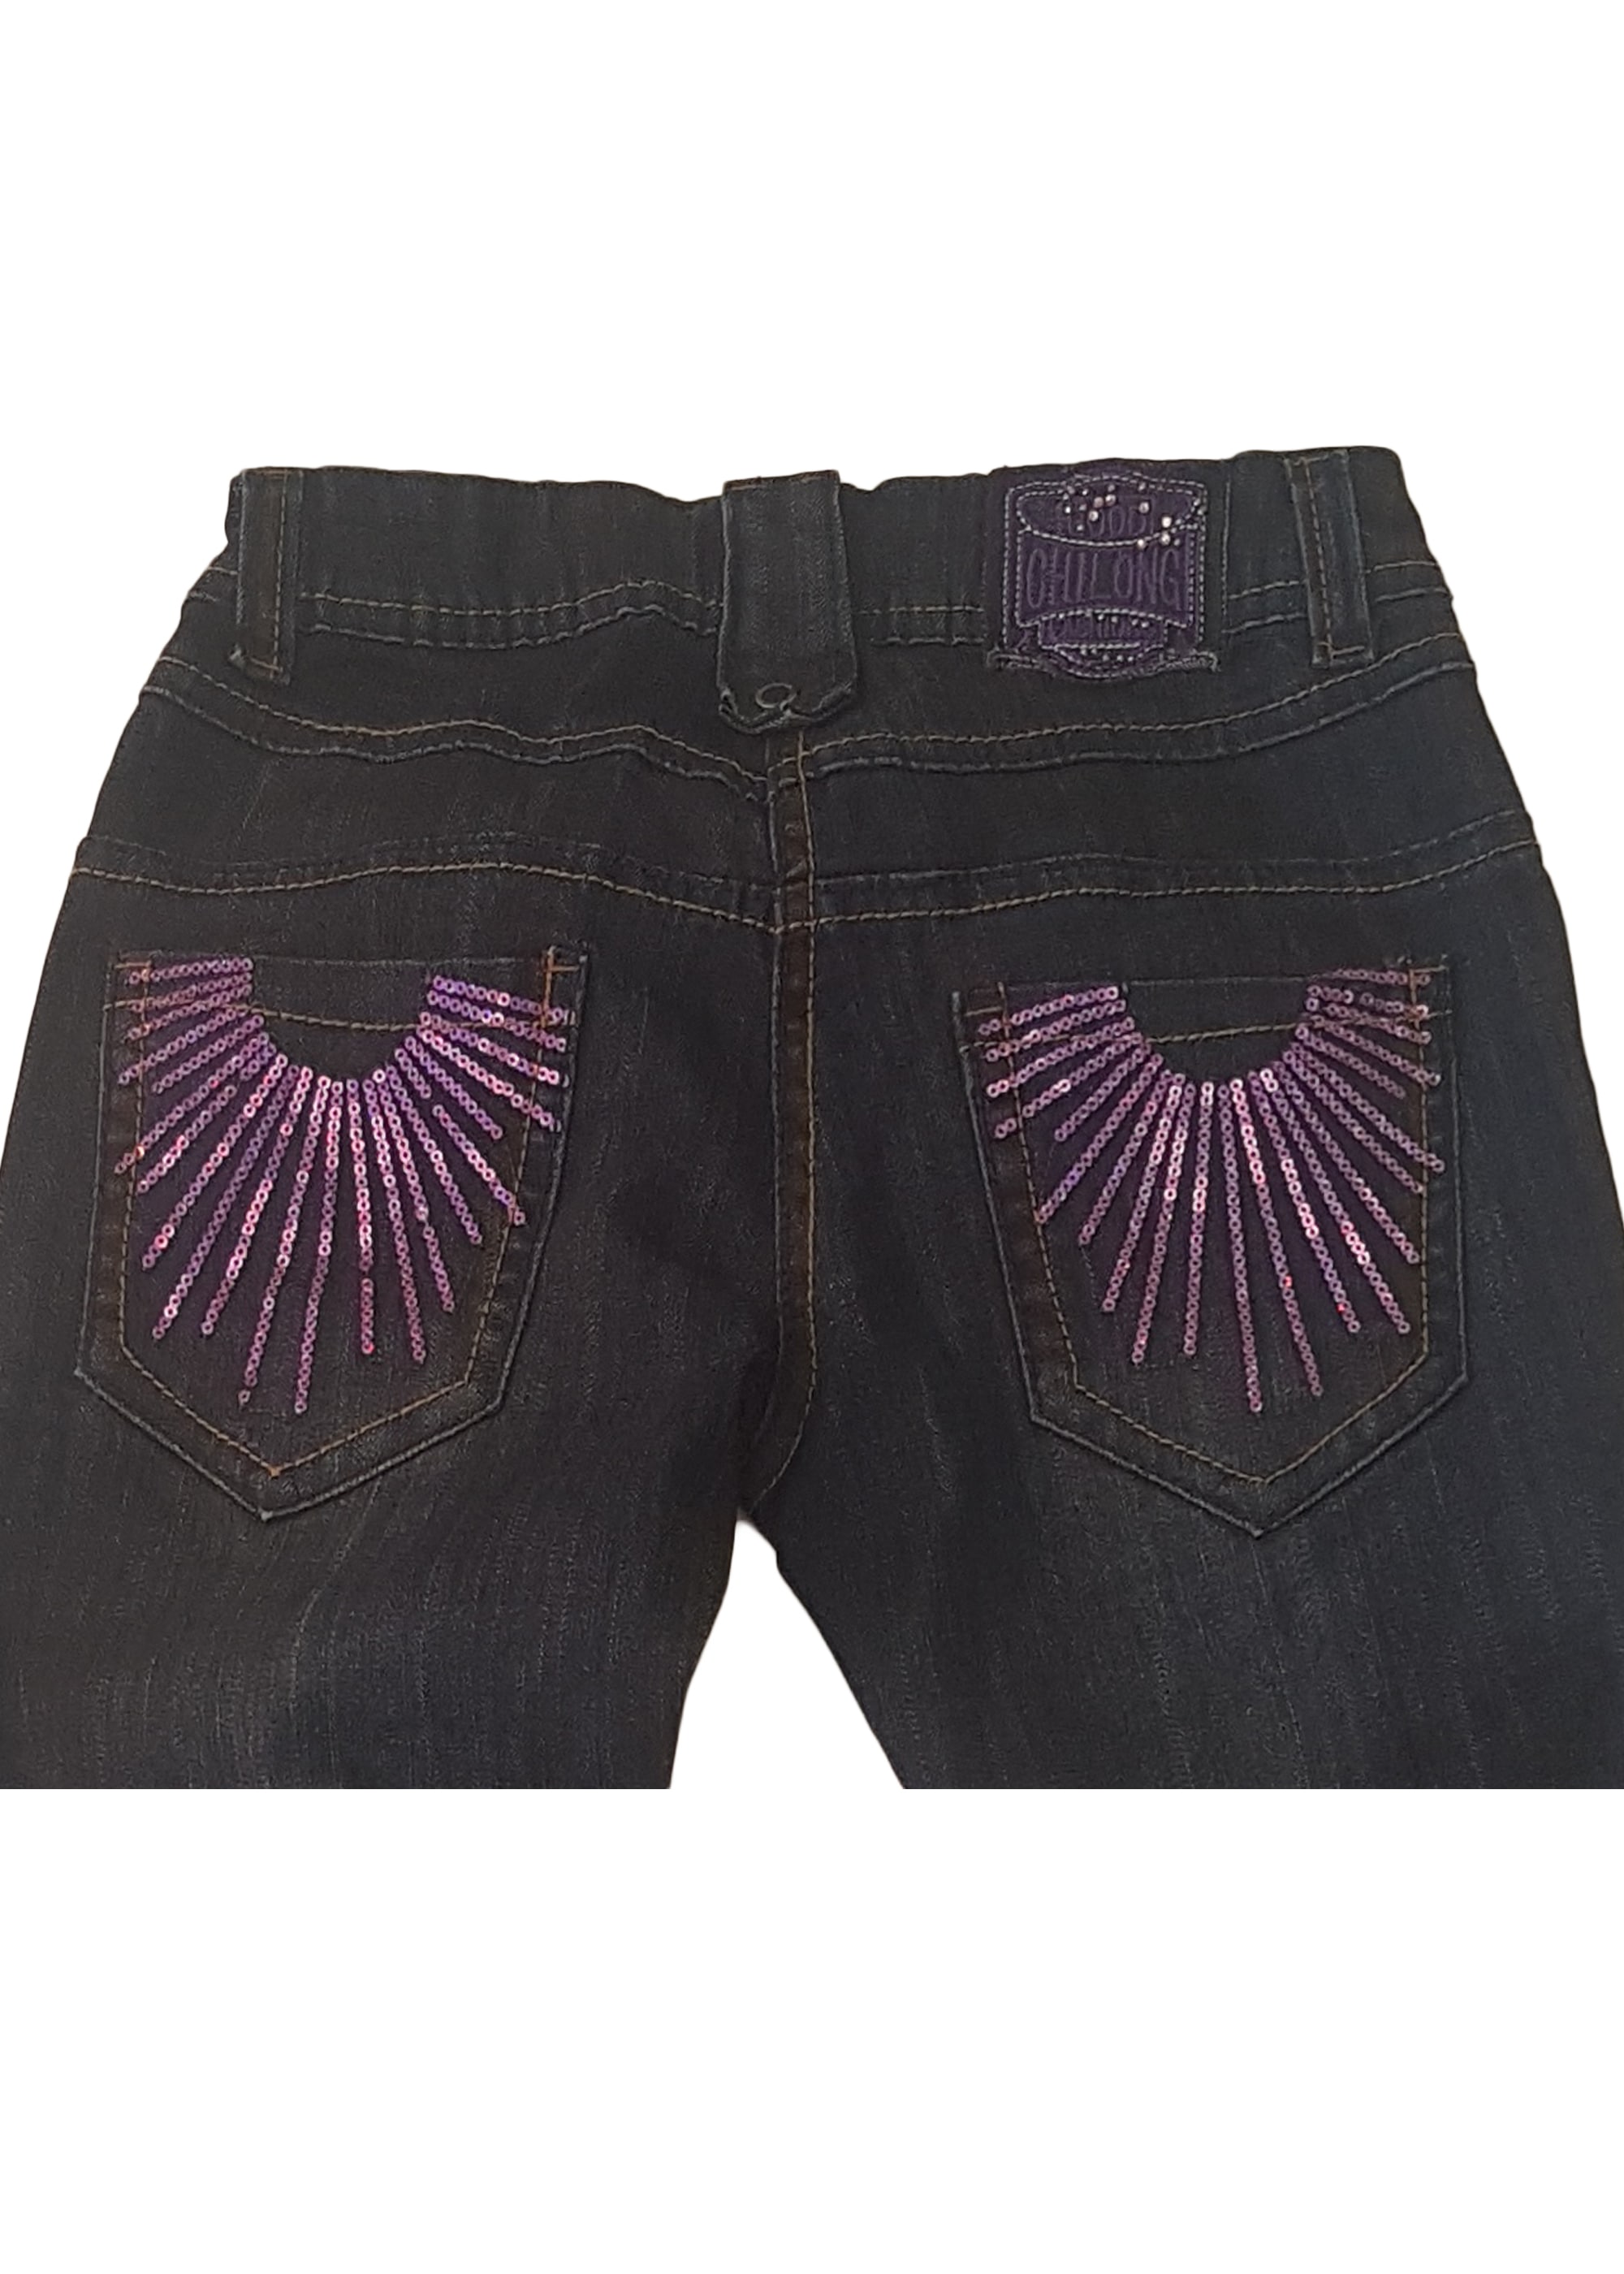 niedlichen Slim-fit-Jeans Details Friday BAUR Trends Family Stil«, Black | Pocket mit »im 5